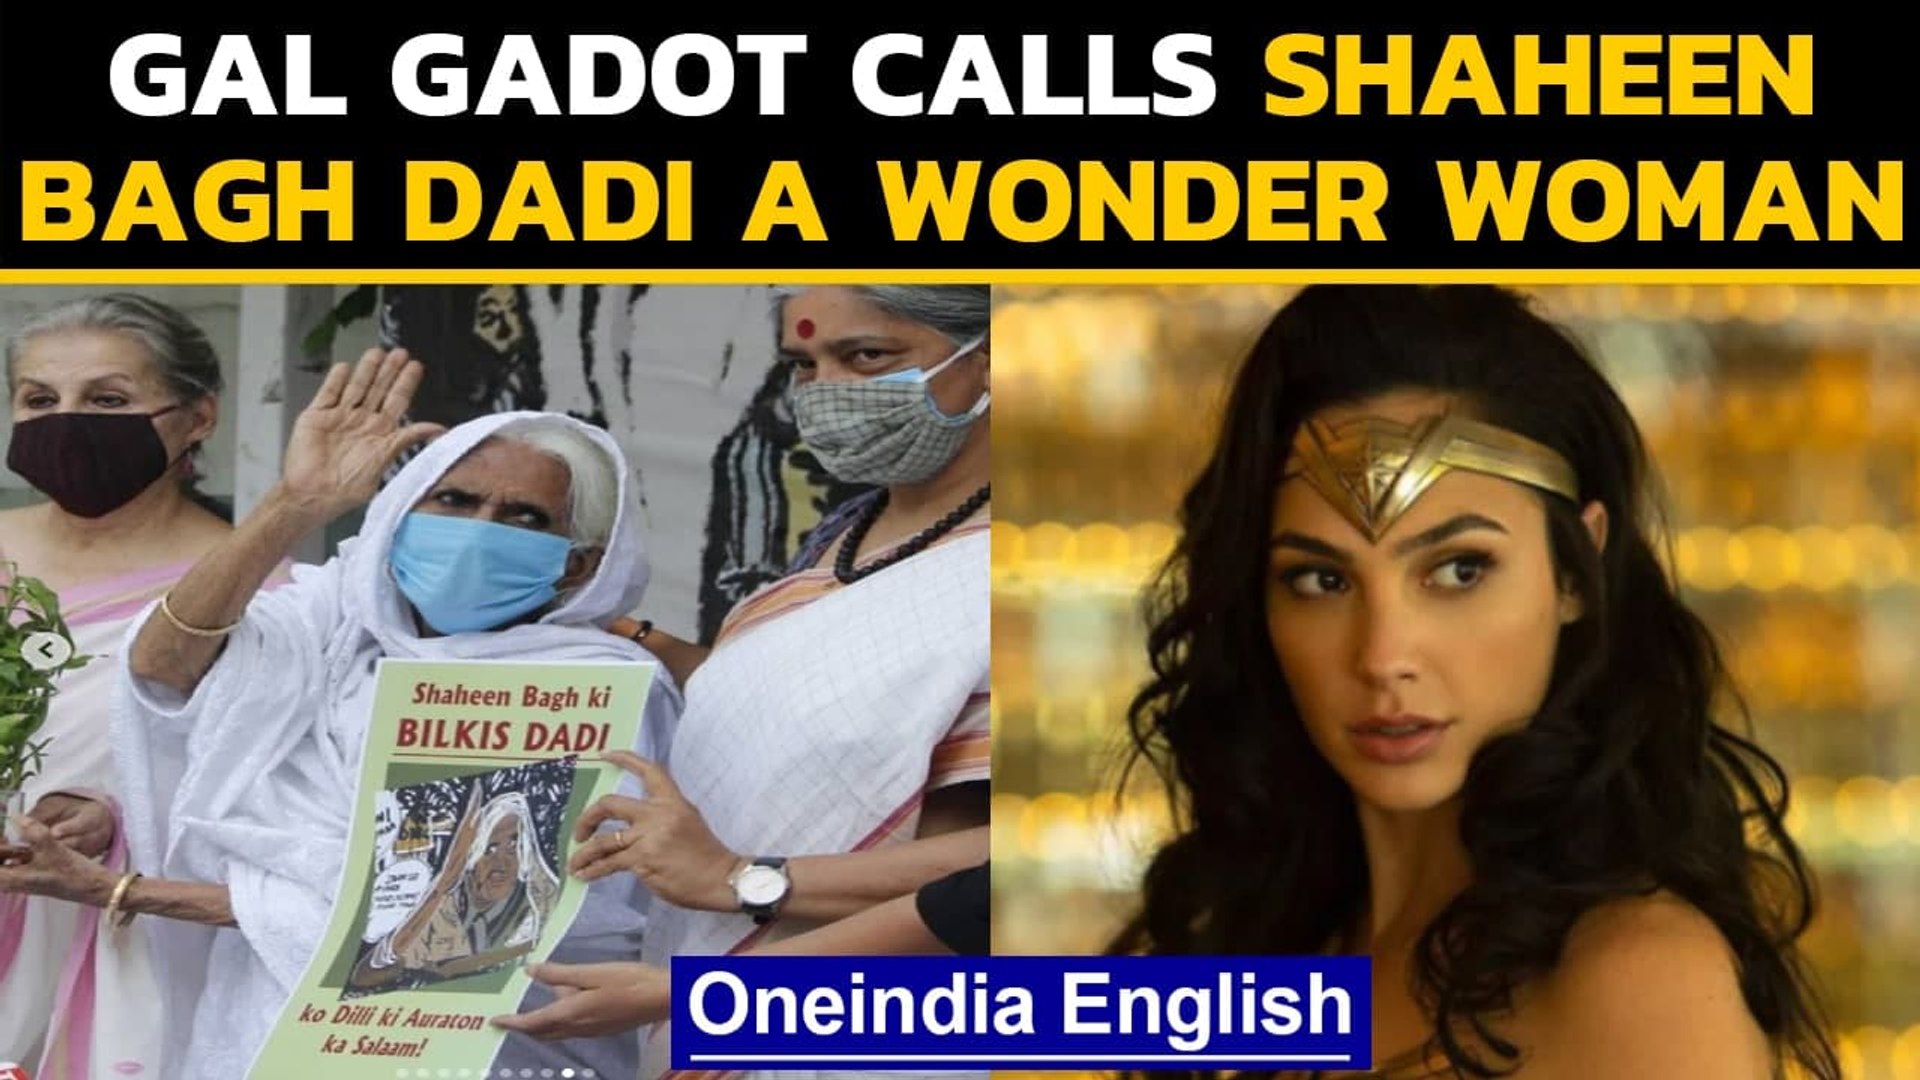 Gal Gadot as Wonder Woman in the movie Wonder Woman 2017 #galgadot